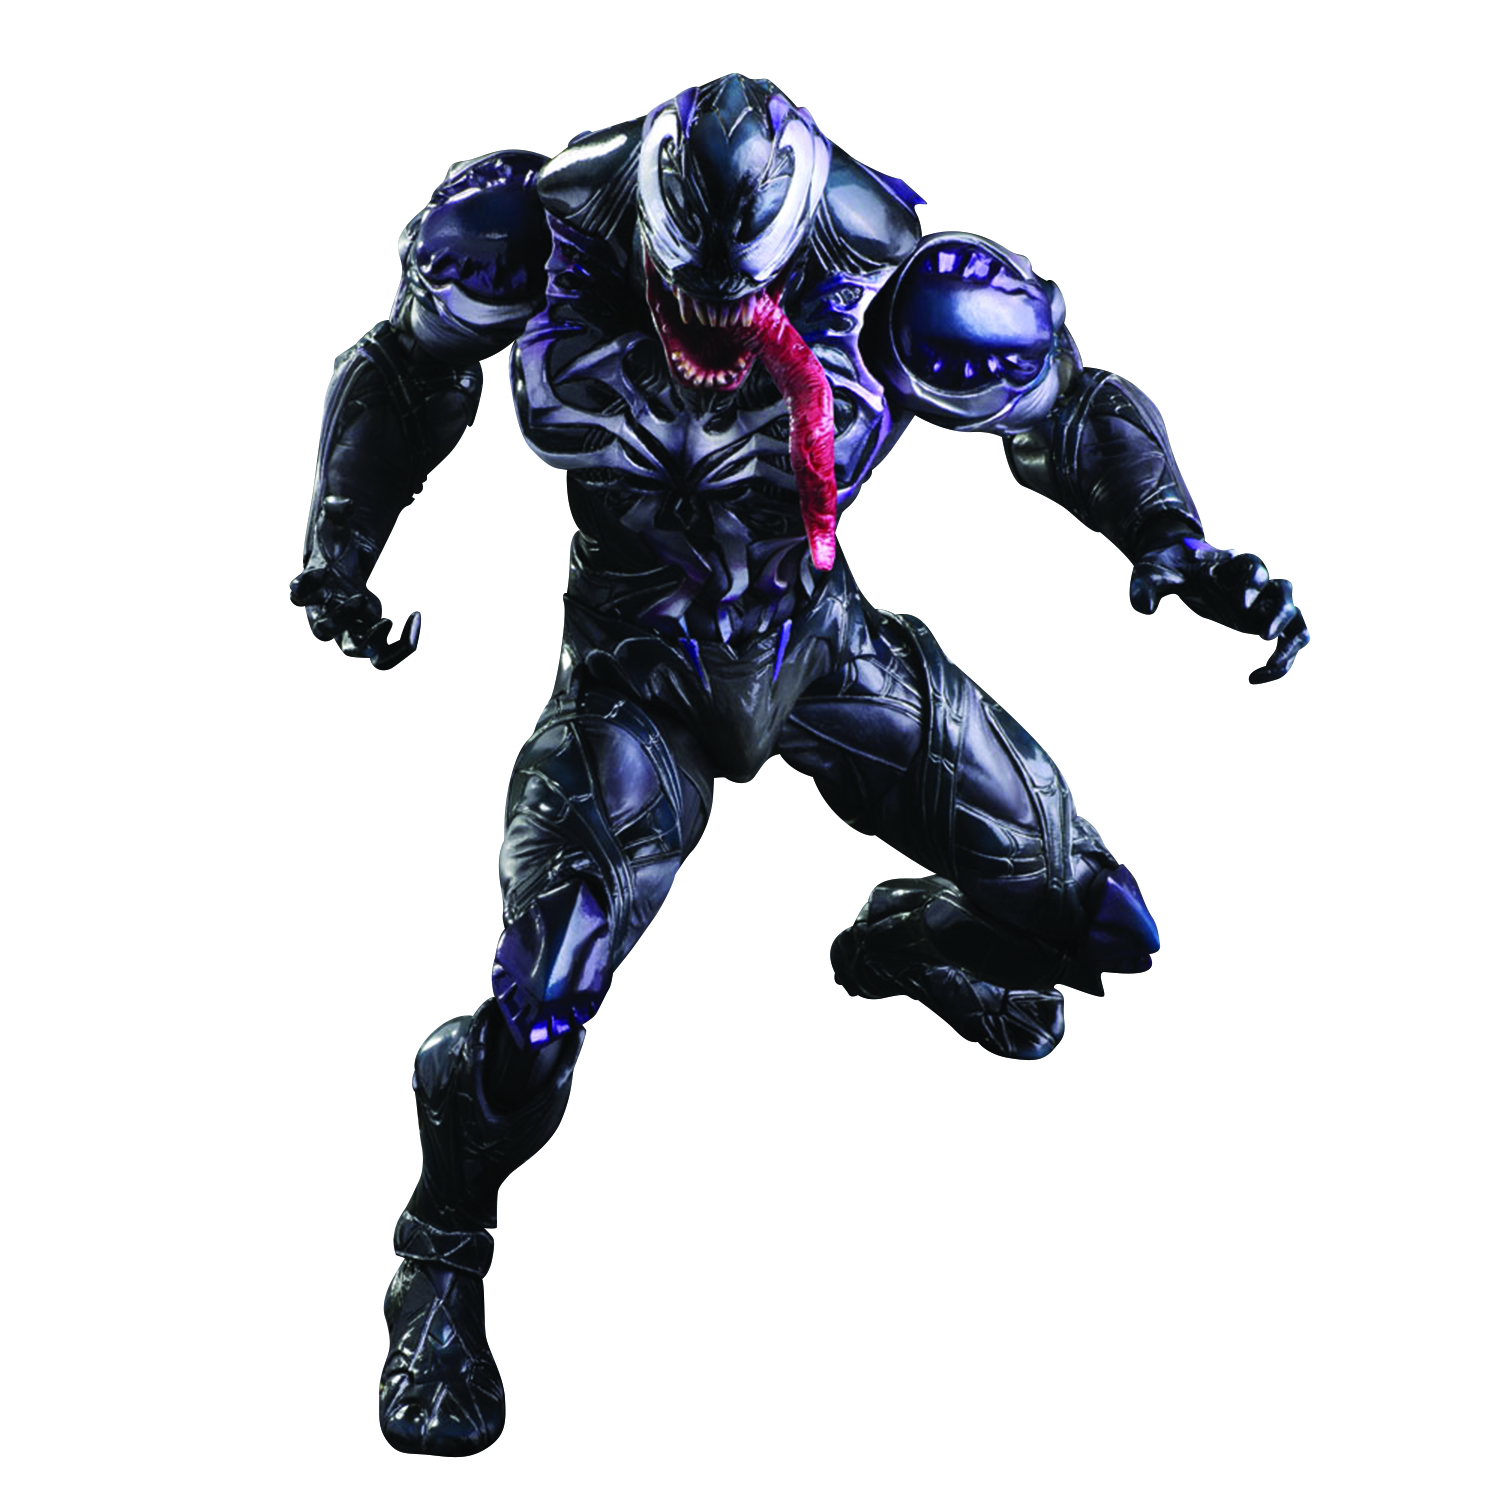 Play Arts Kai VARIANT Marvel Universe Venom Action Figure Toy Doll Model Display 